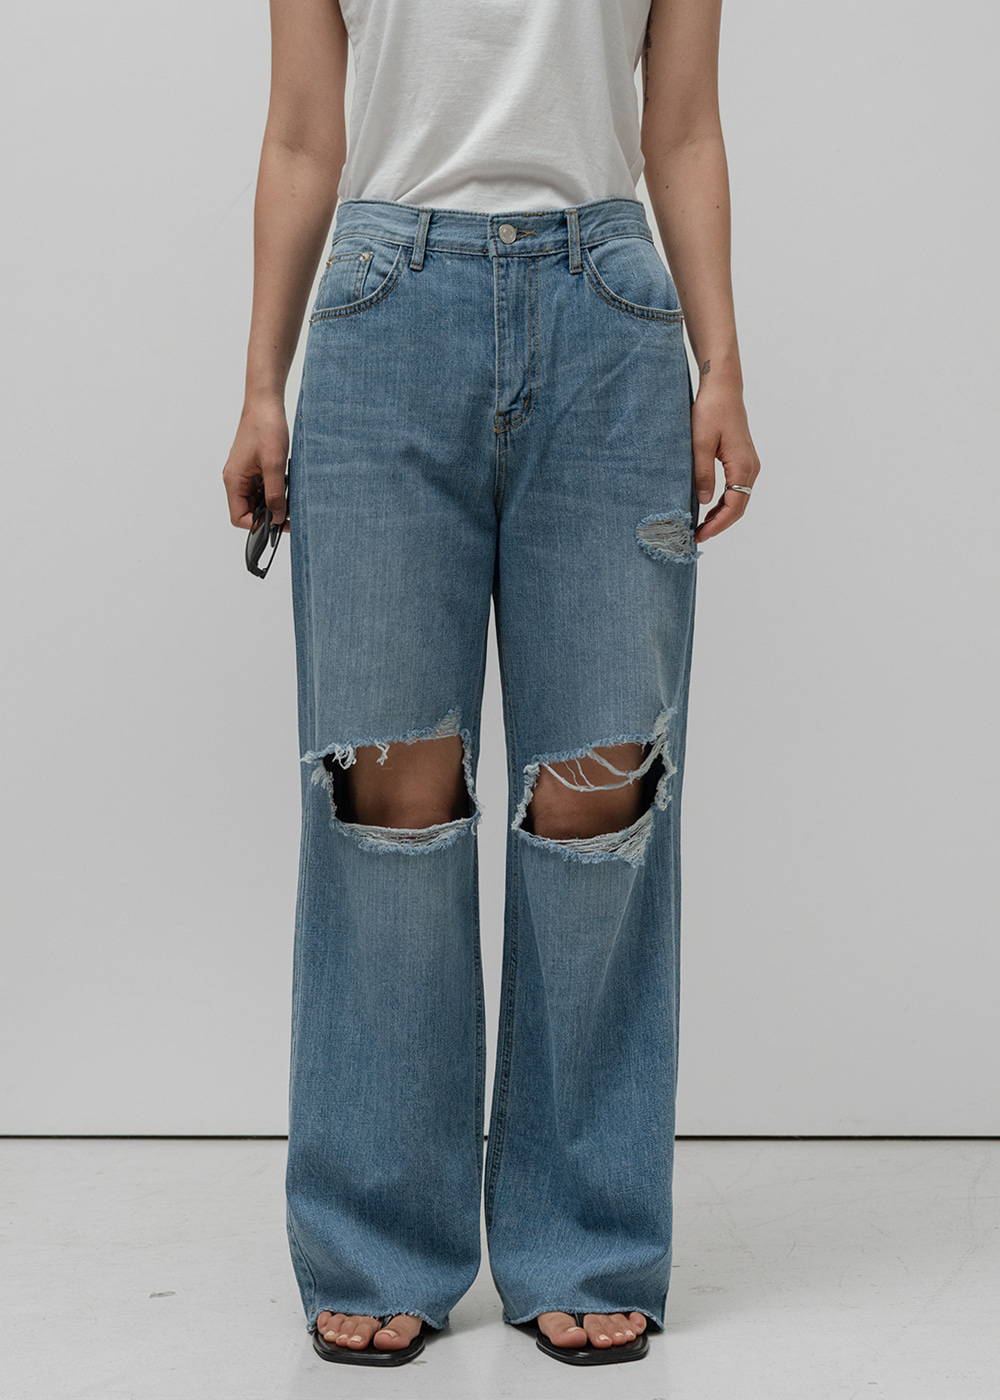 [RENEWAL] Destroyed jeans (S,M,L)